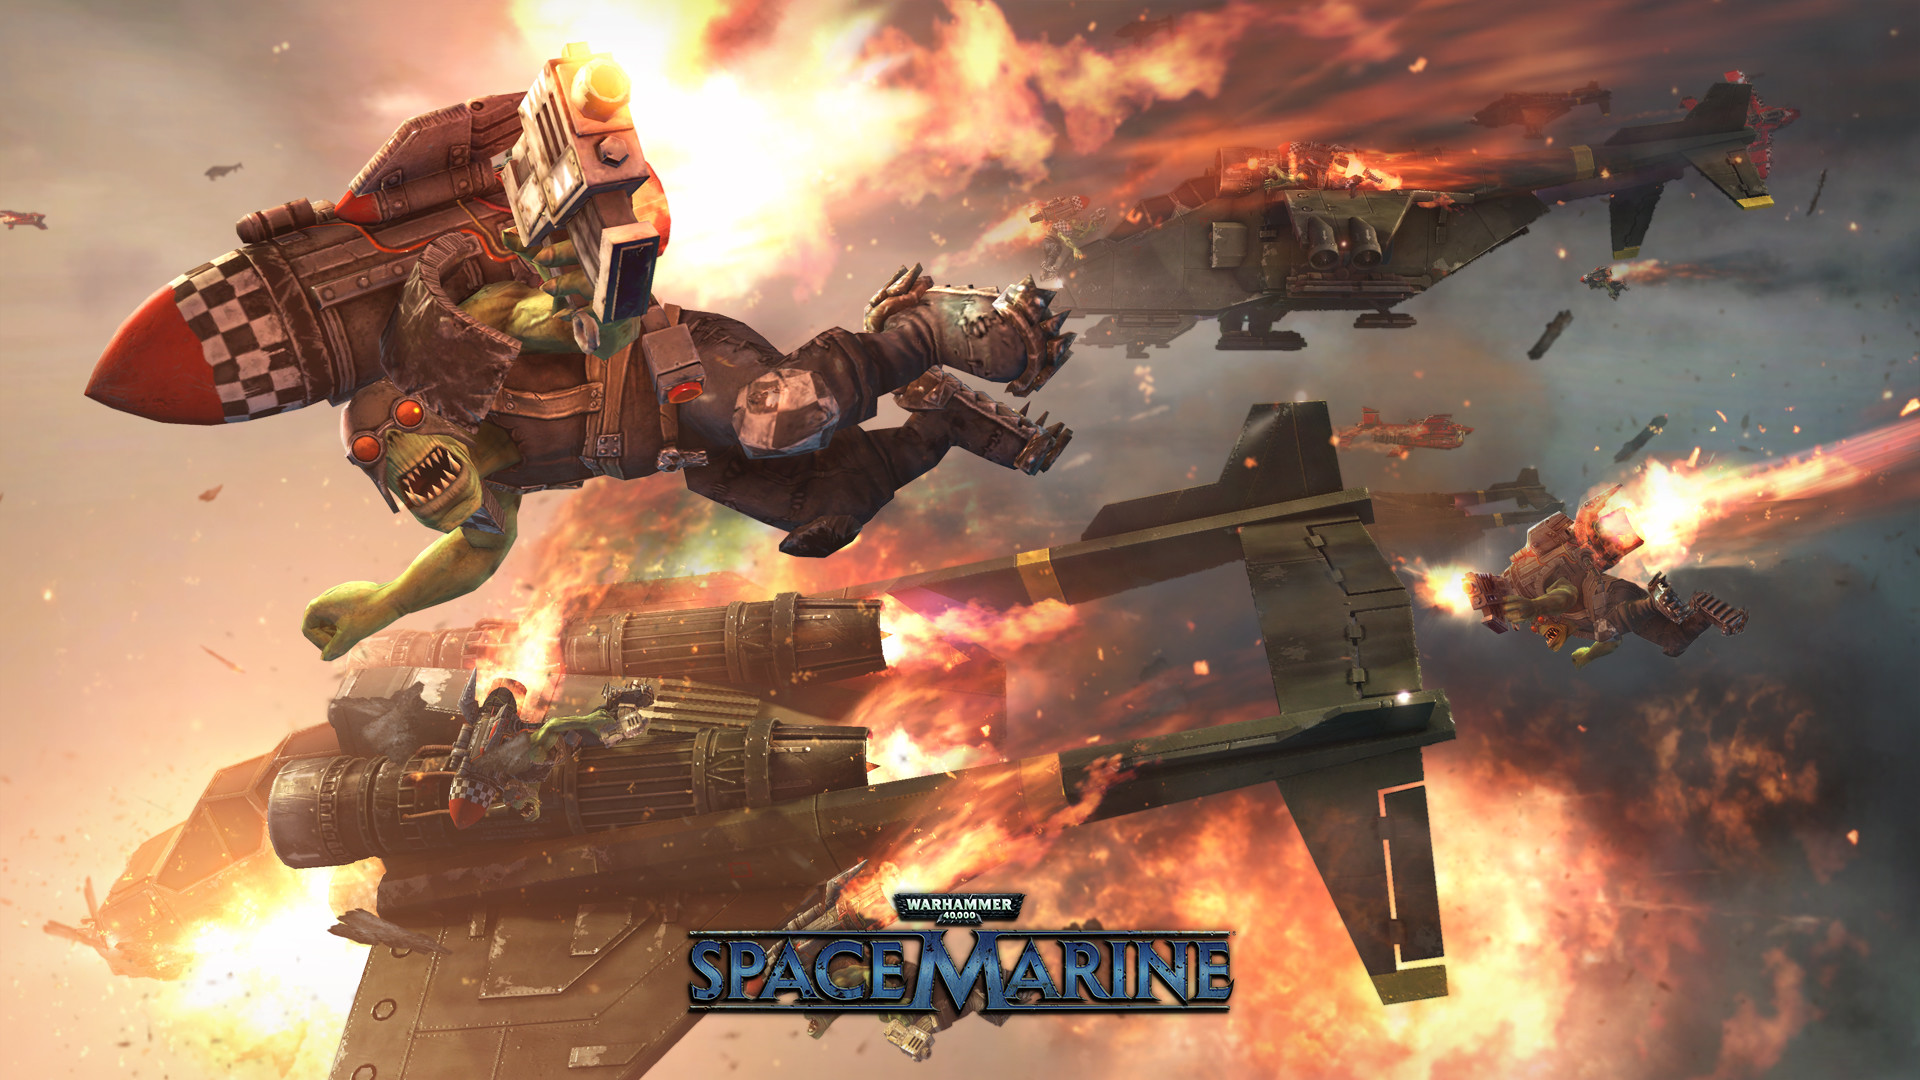 [$ 26.11] Warhammer 40,000: Space Marine - Anniversary Edition English Language Only Steam CD Key